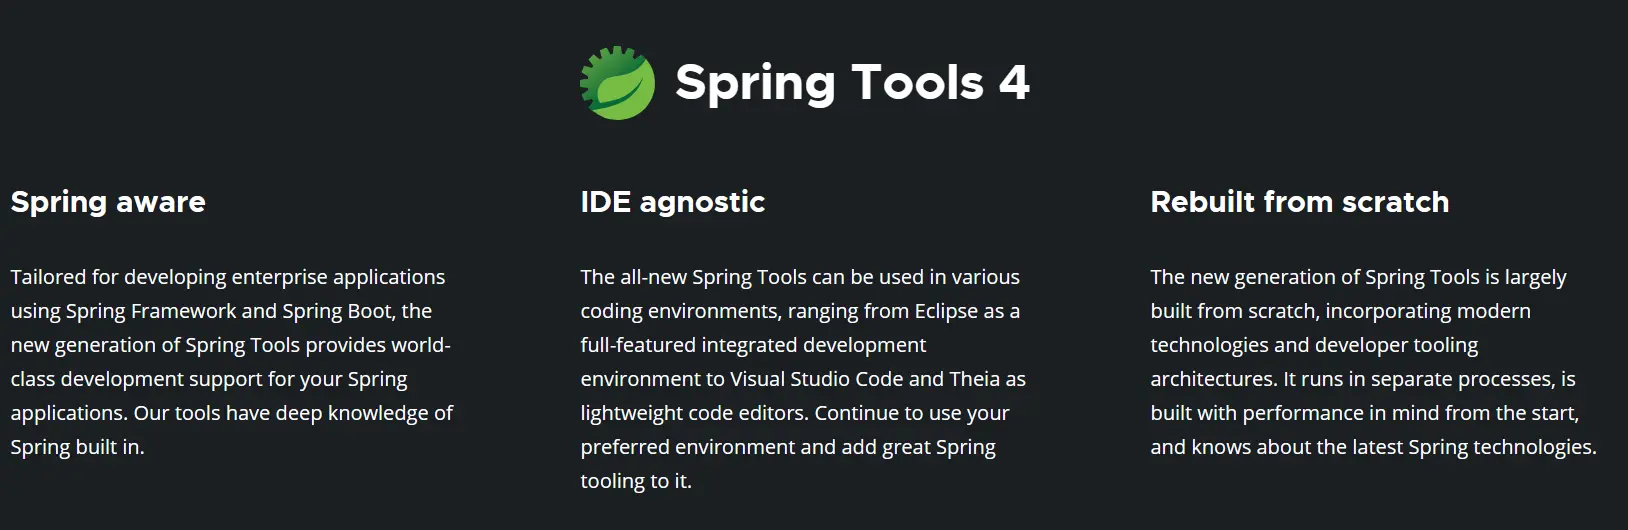 Spring Tools 4 공식 다운로드 사이트 내 설명